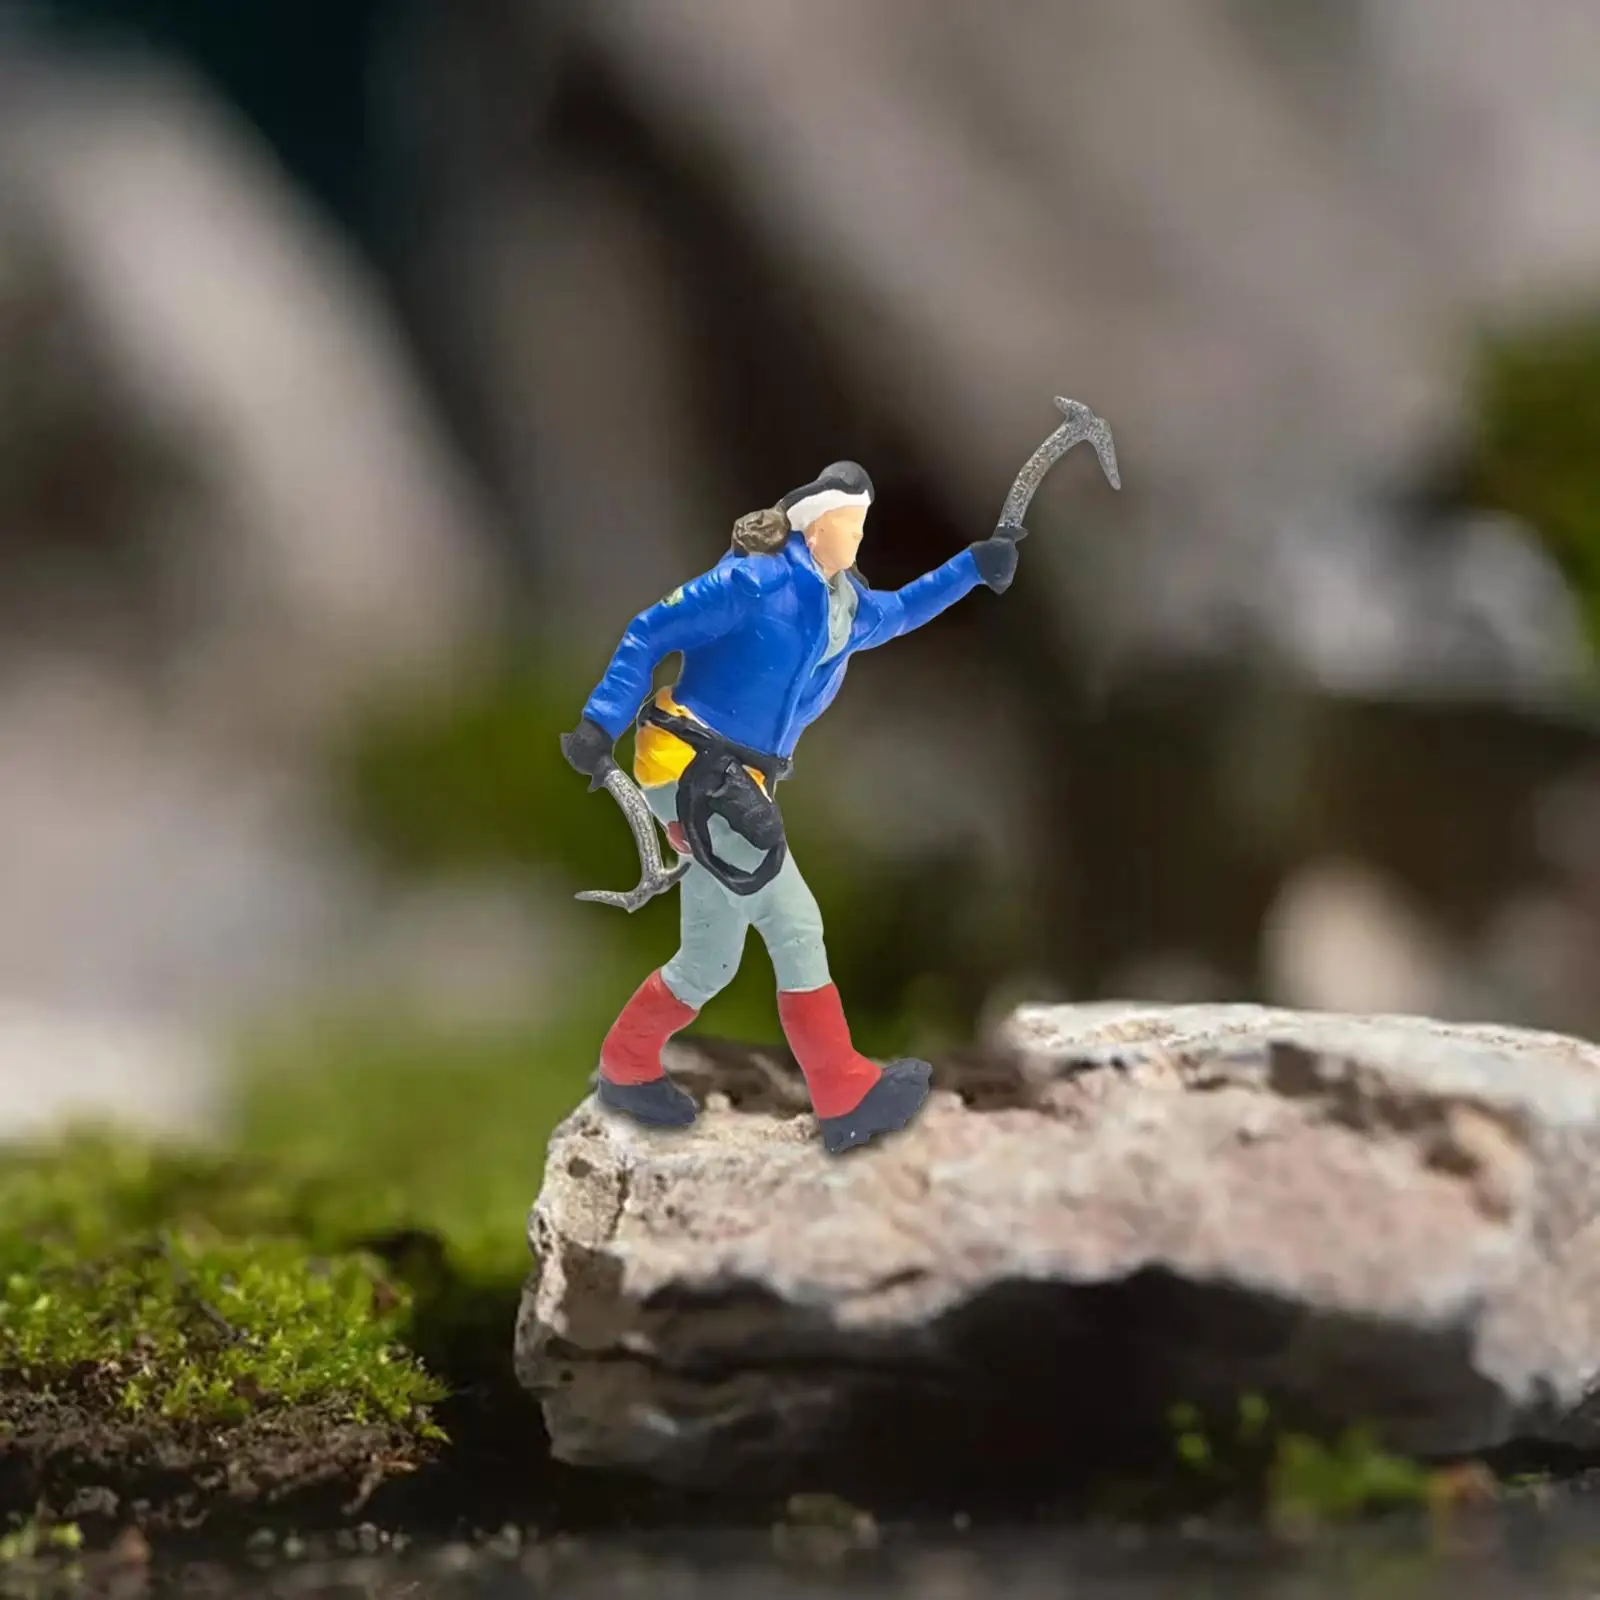 Realistic 1/64 Climbing People Figurines for Miniature Scene Layout Decor